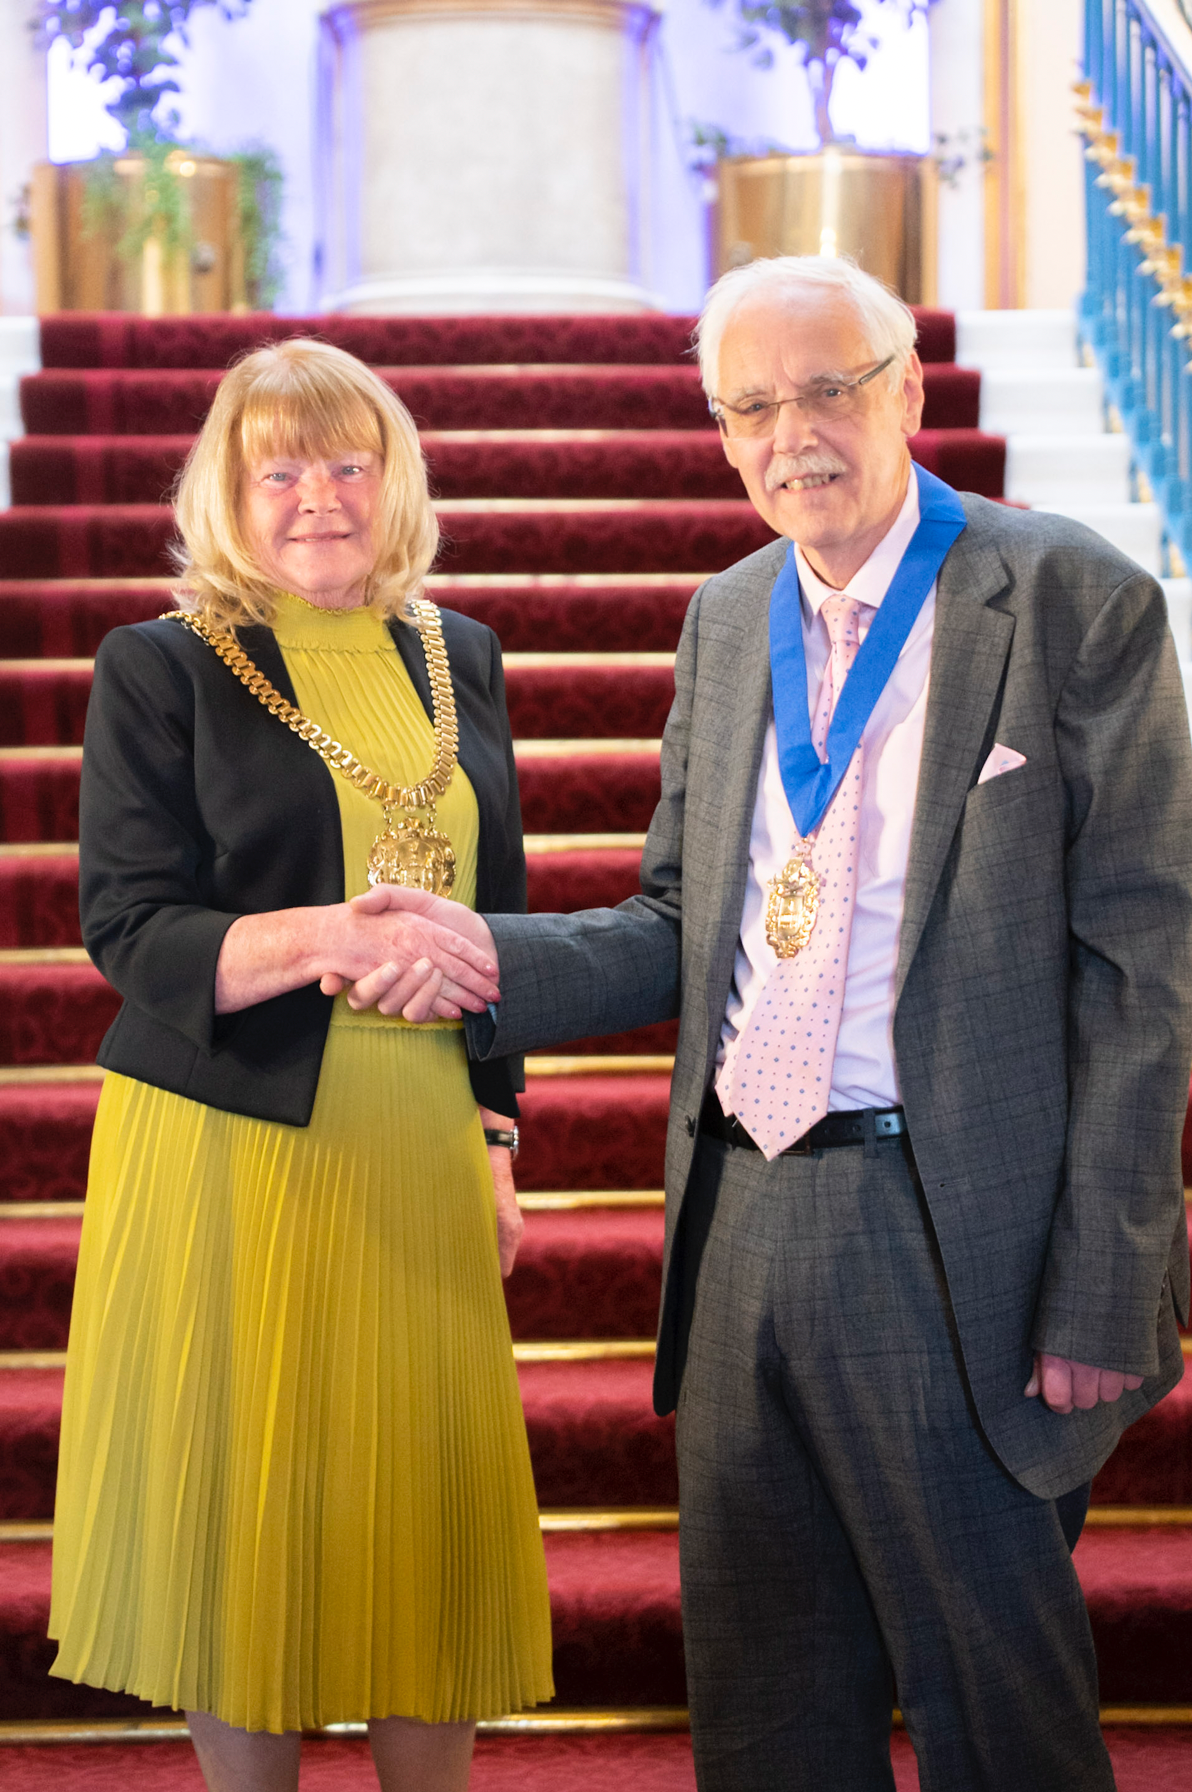 Liverpool new Lord Mayor, Cllr Mary Rasmussen and Deputy Lord Mayor, Cllr Richard Kemp